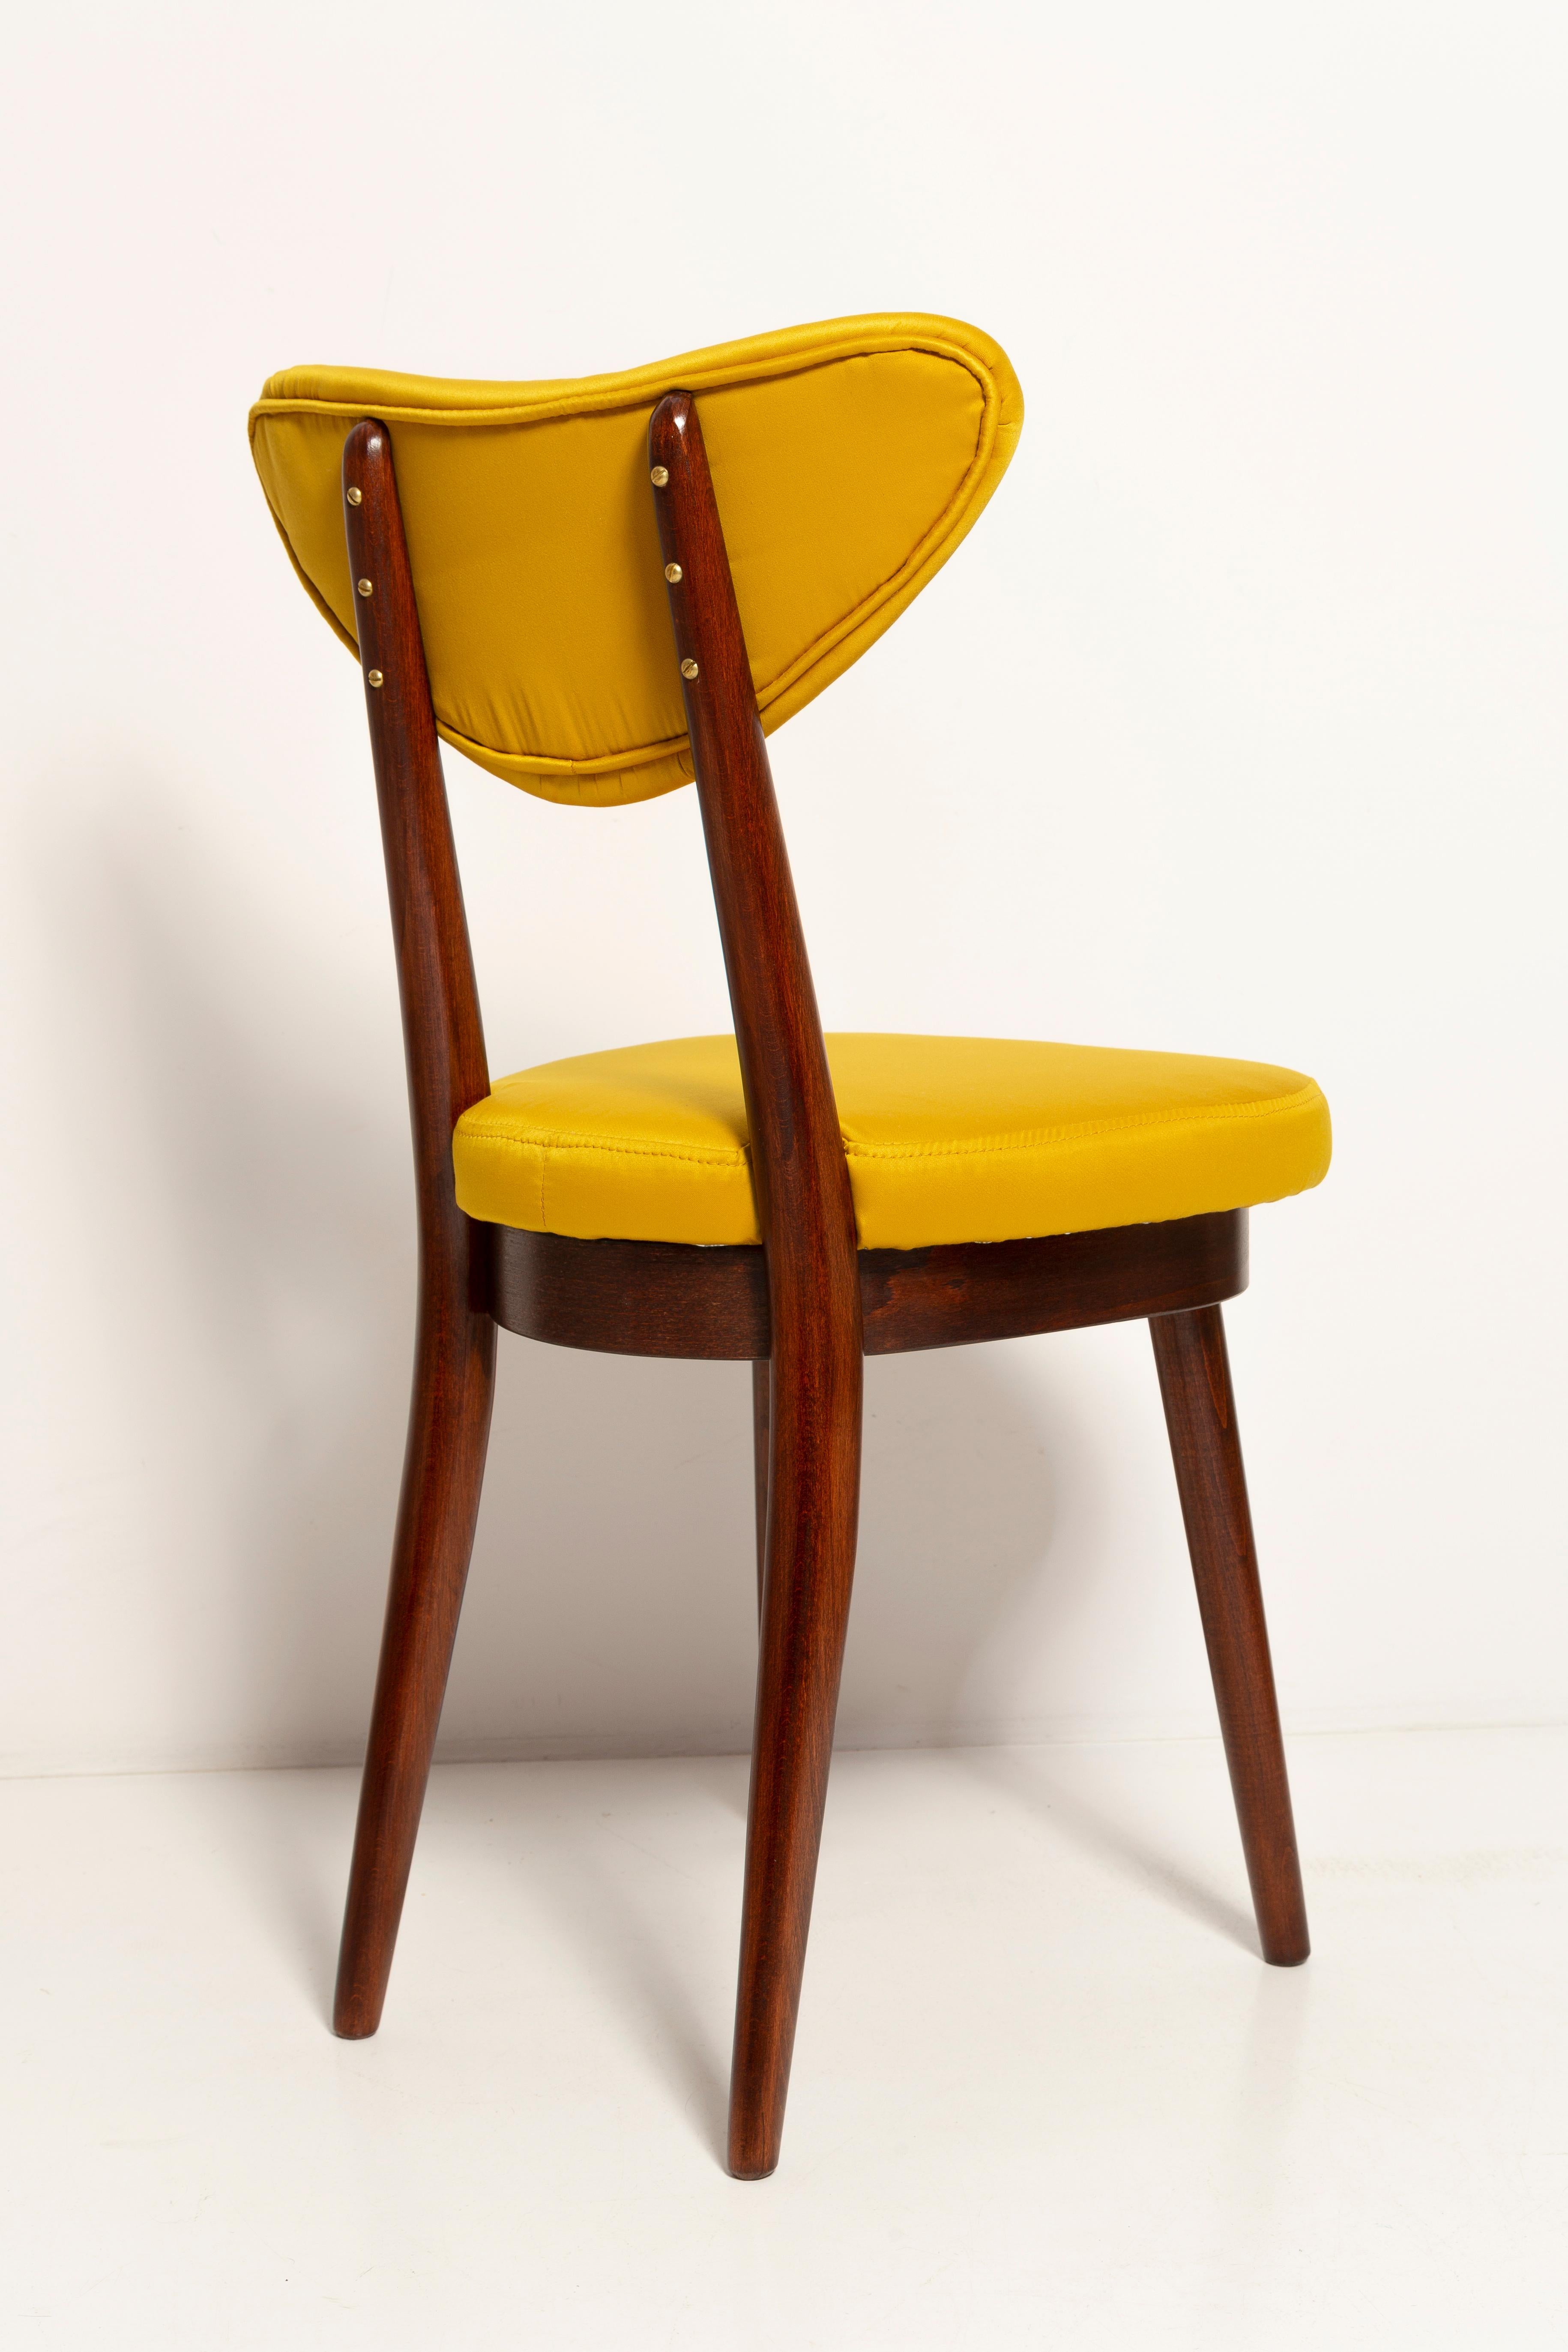 Twelve Midcentury Heart Chairs, Yellow Satin Dedar Gildo Fabric, Europe, 1960s For Sale 1